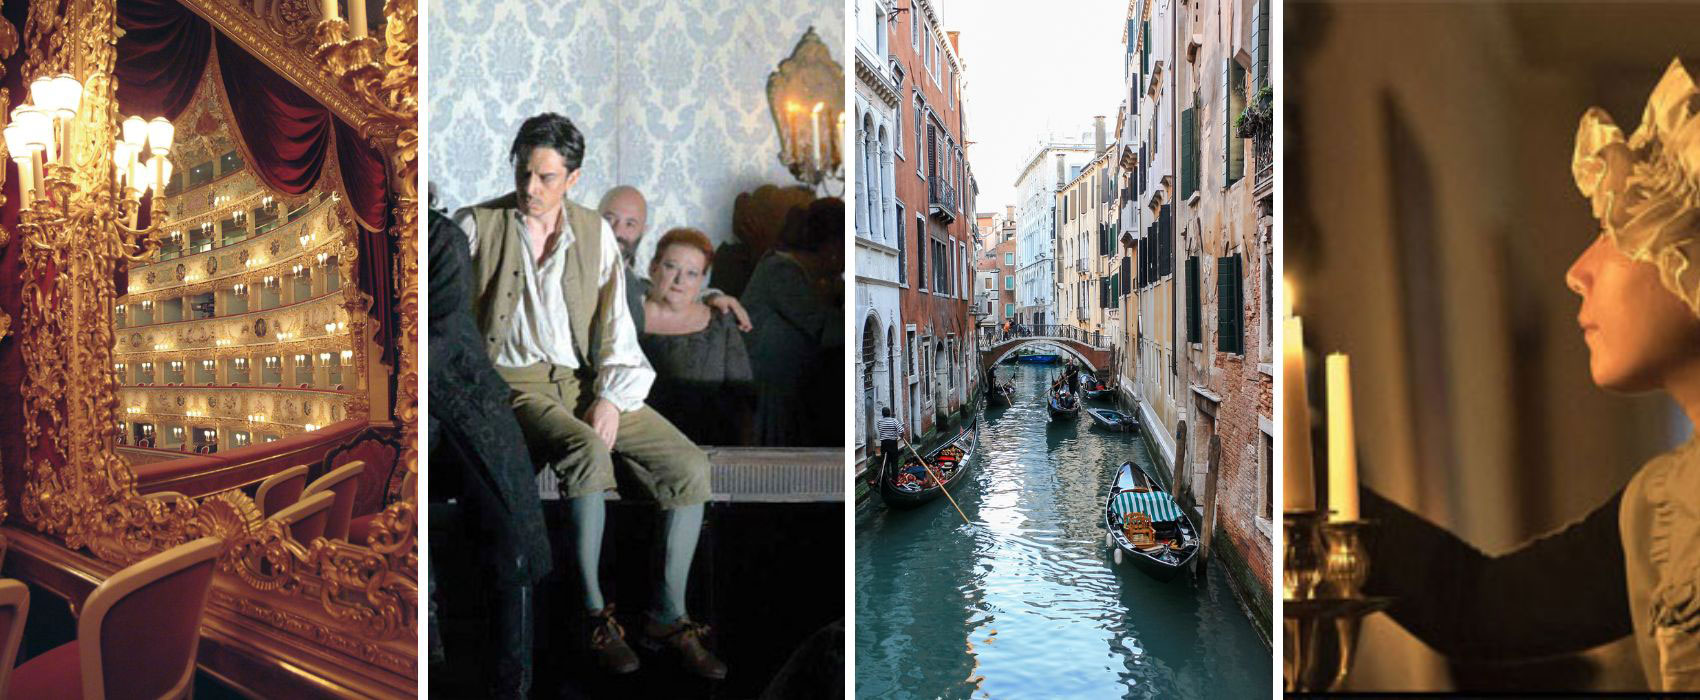 Venise du 17/05 au 20/05 : Don Giovanni chez Casanova